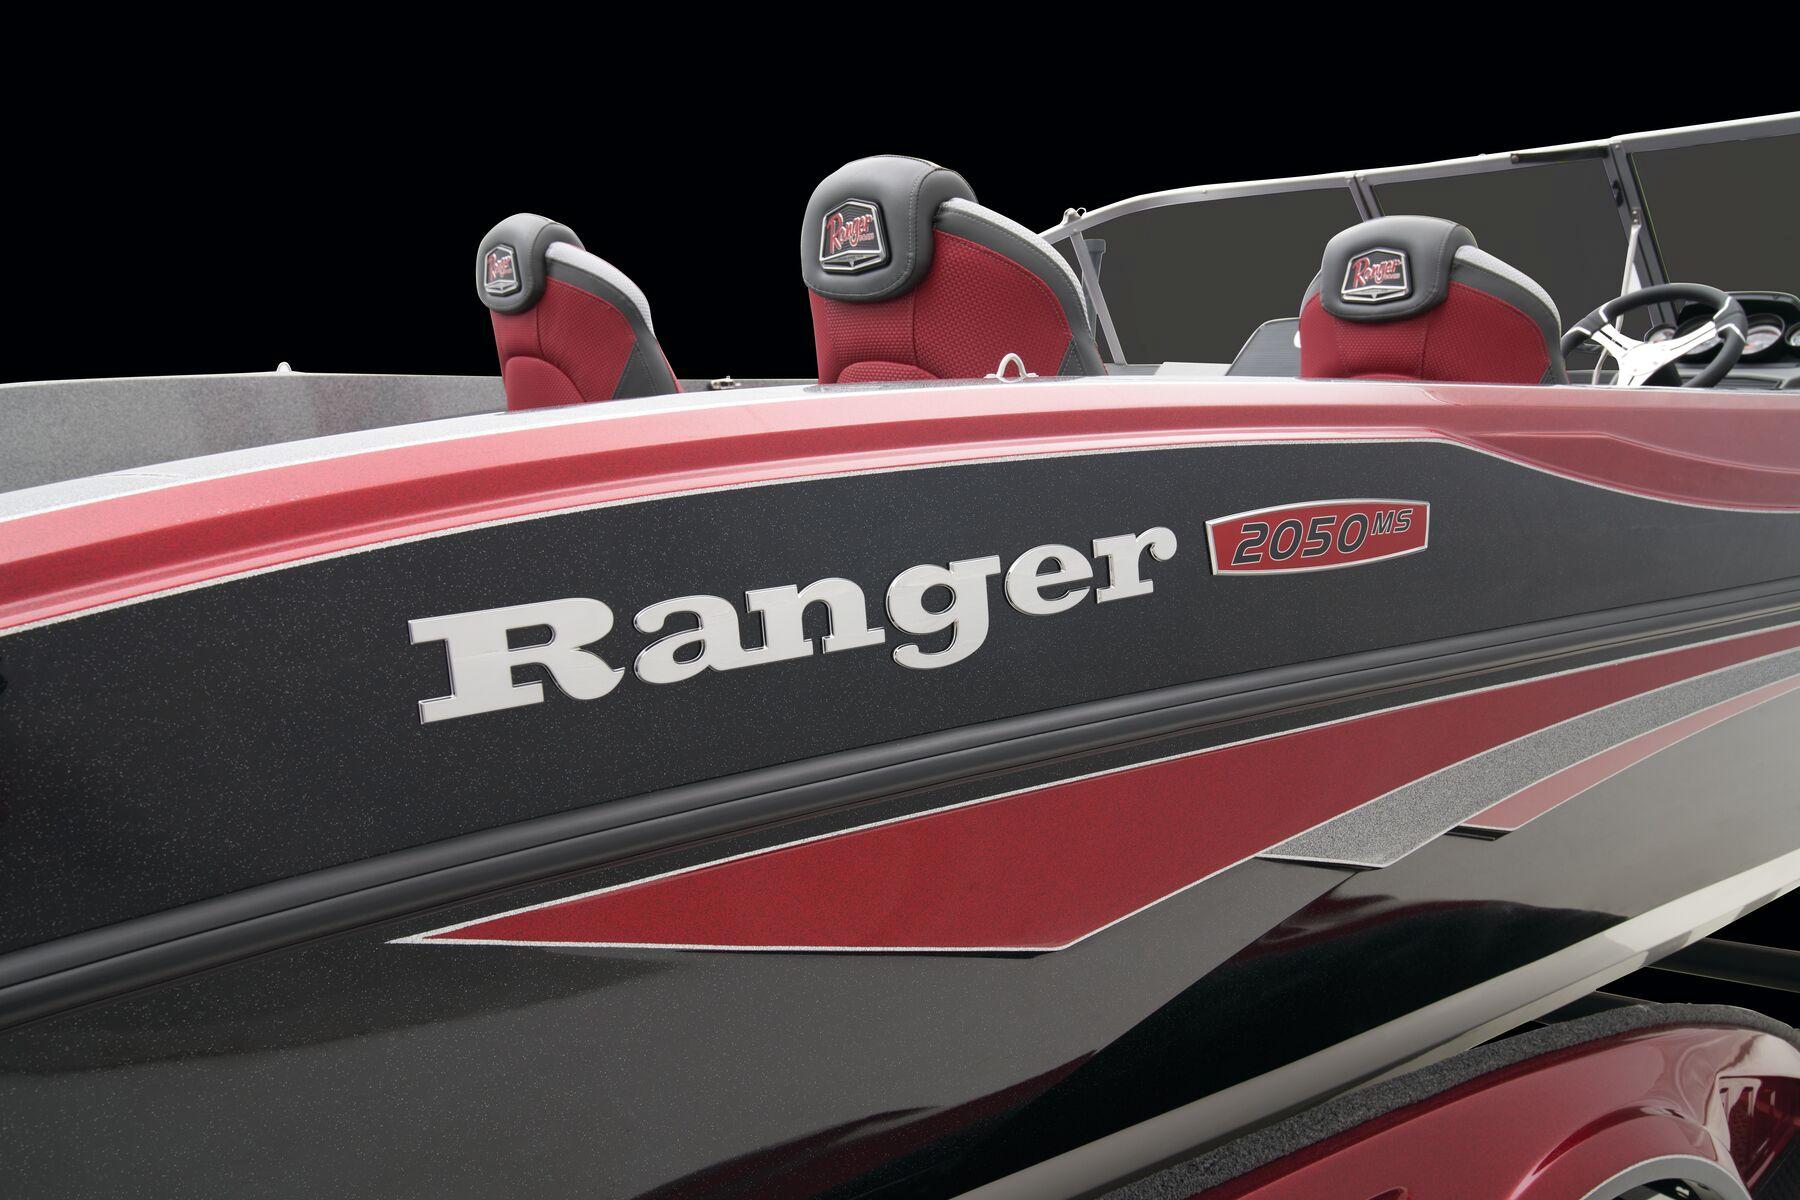 Manufacturer Provided Image: Ranger 2050MS